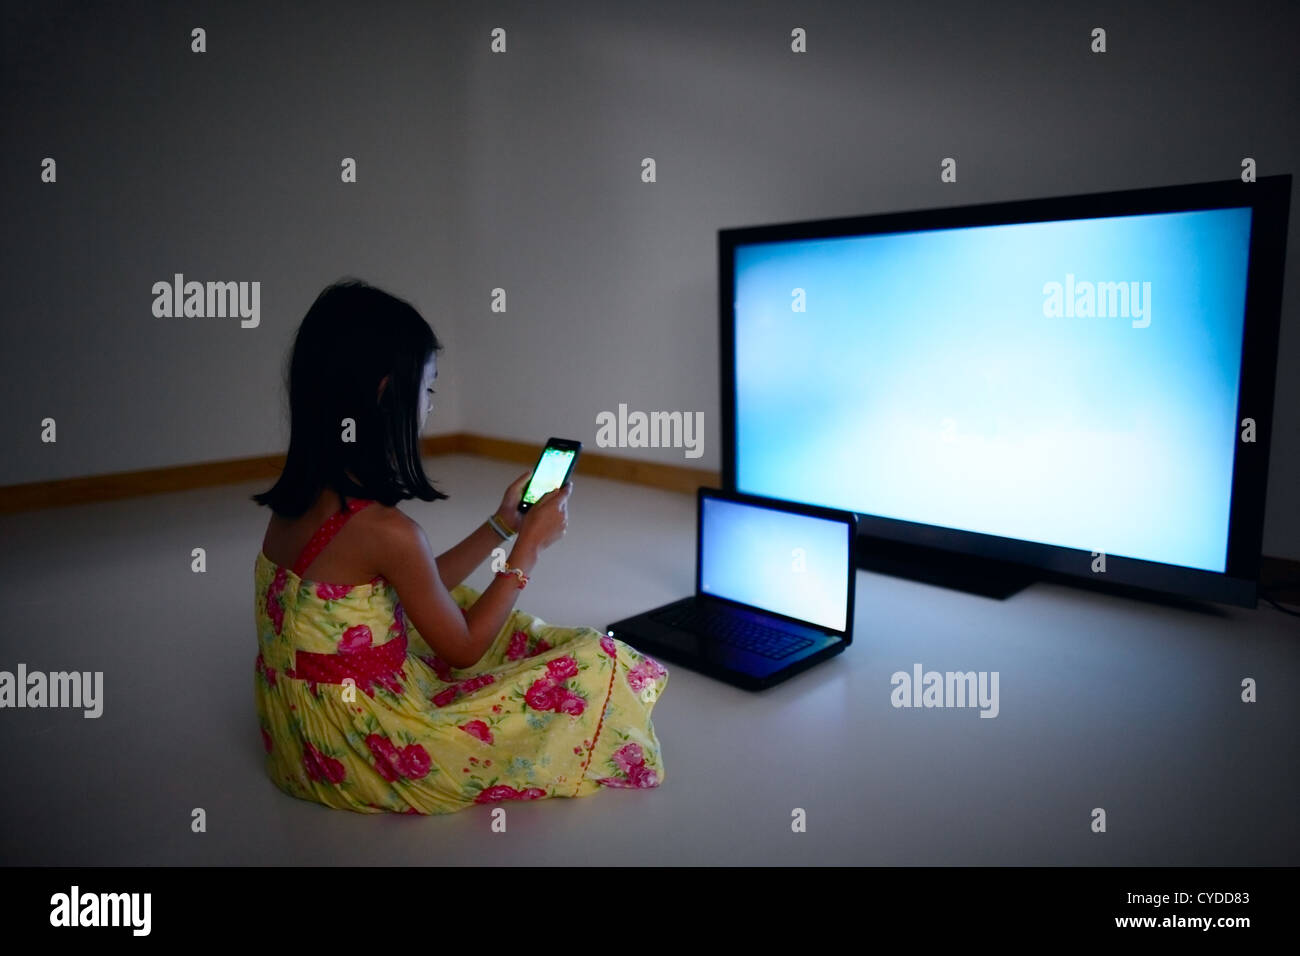 Smartphone, laptop, television. Stock Photo